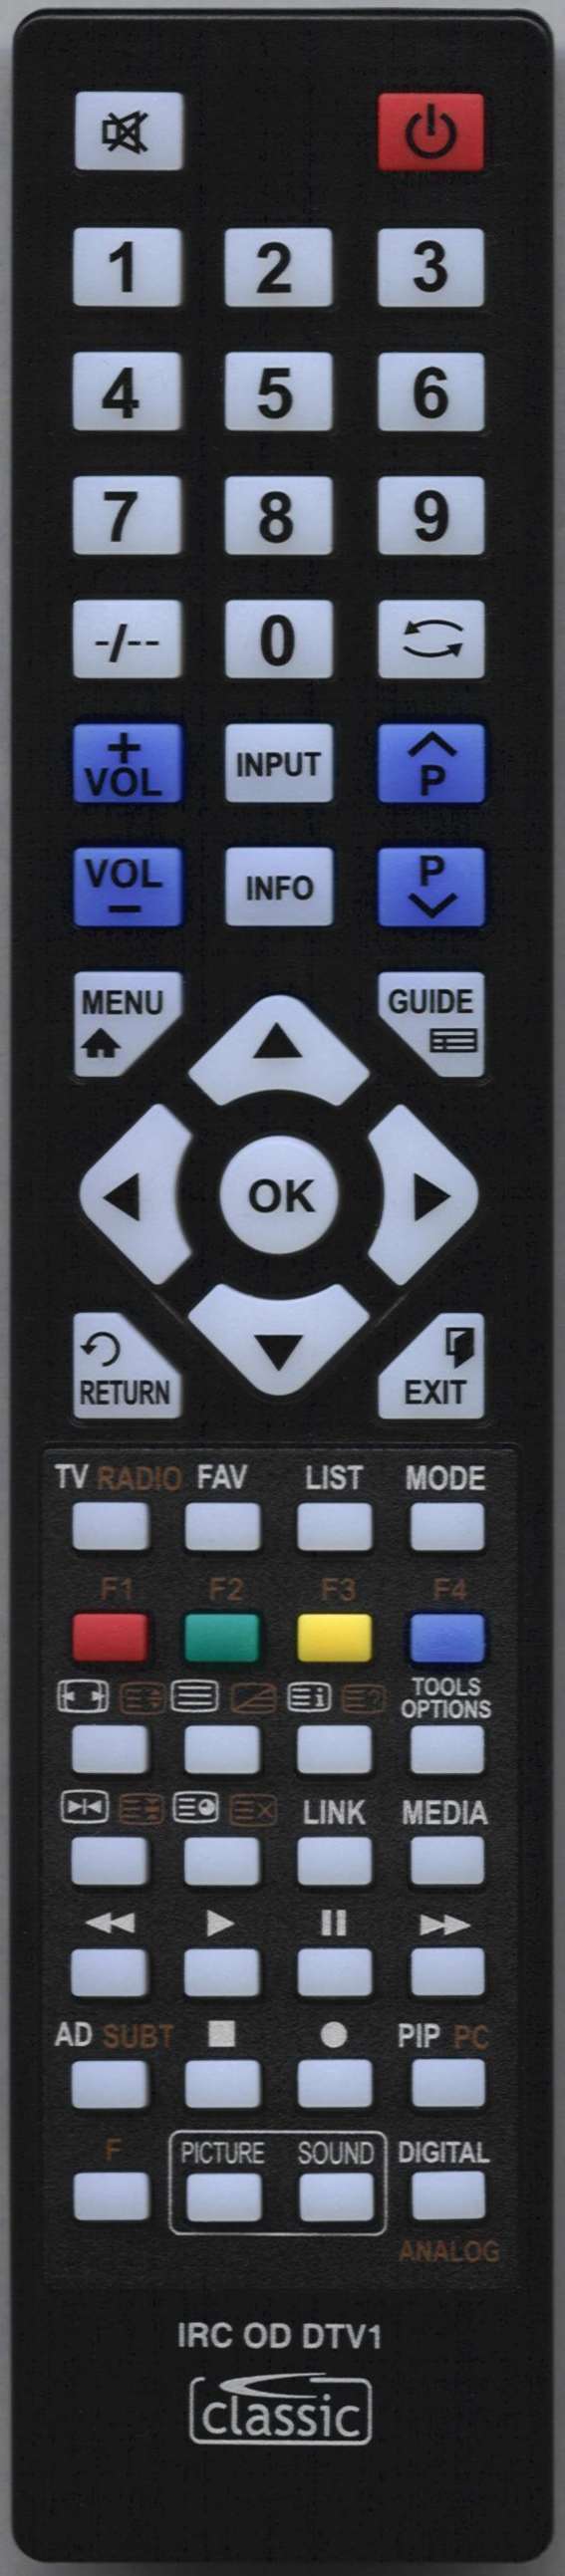 TEVION LCD-TV 2212 Remote Control